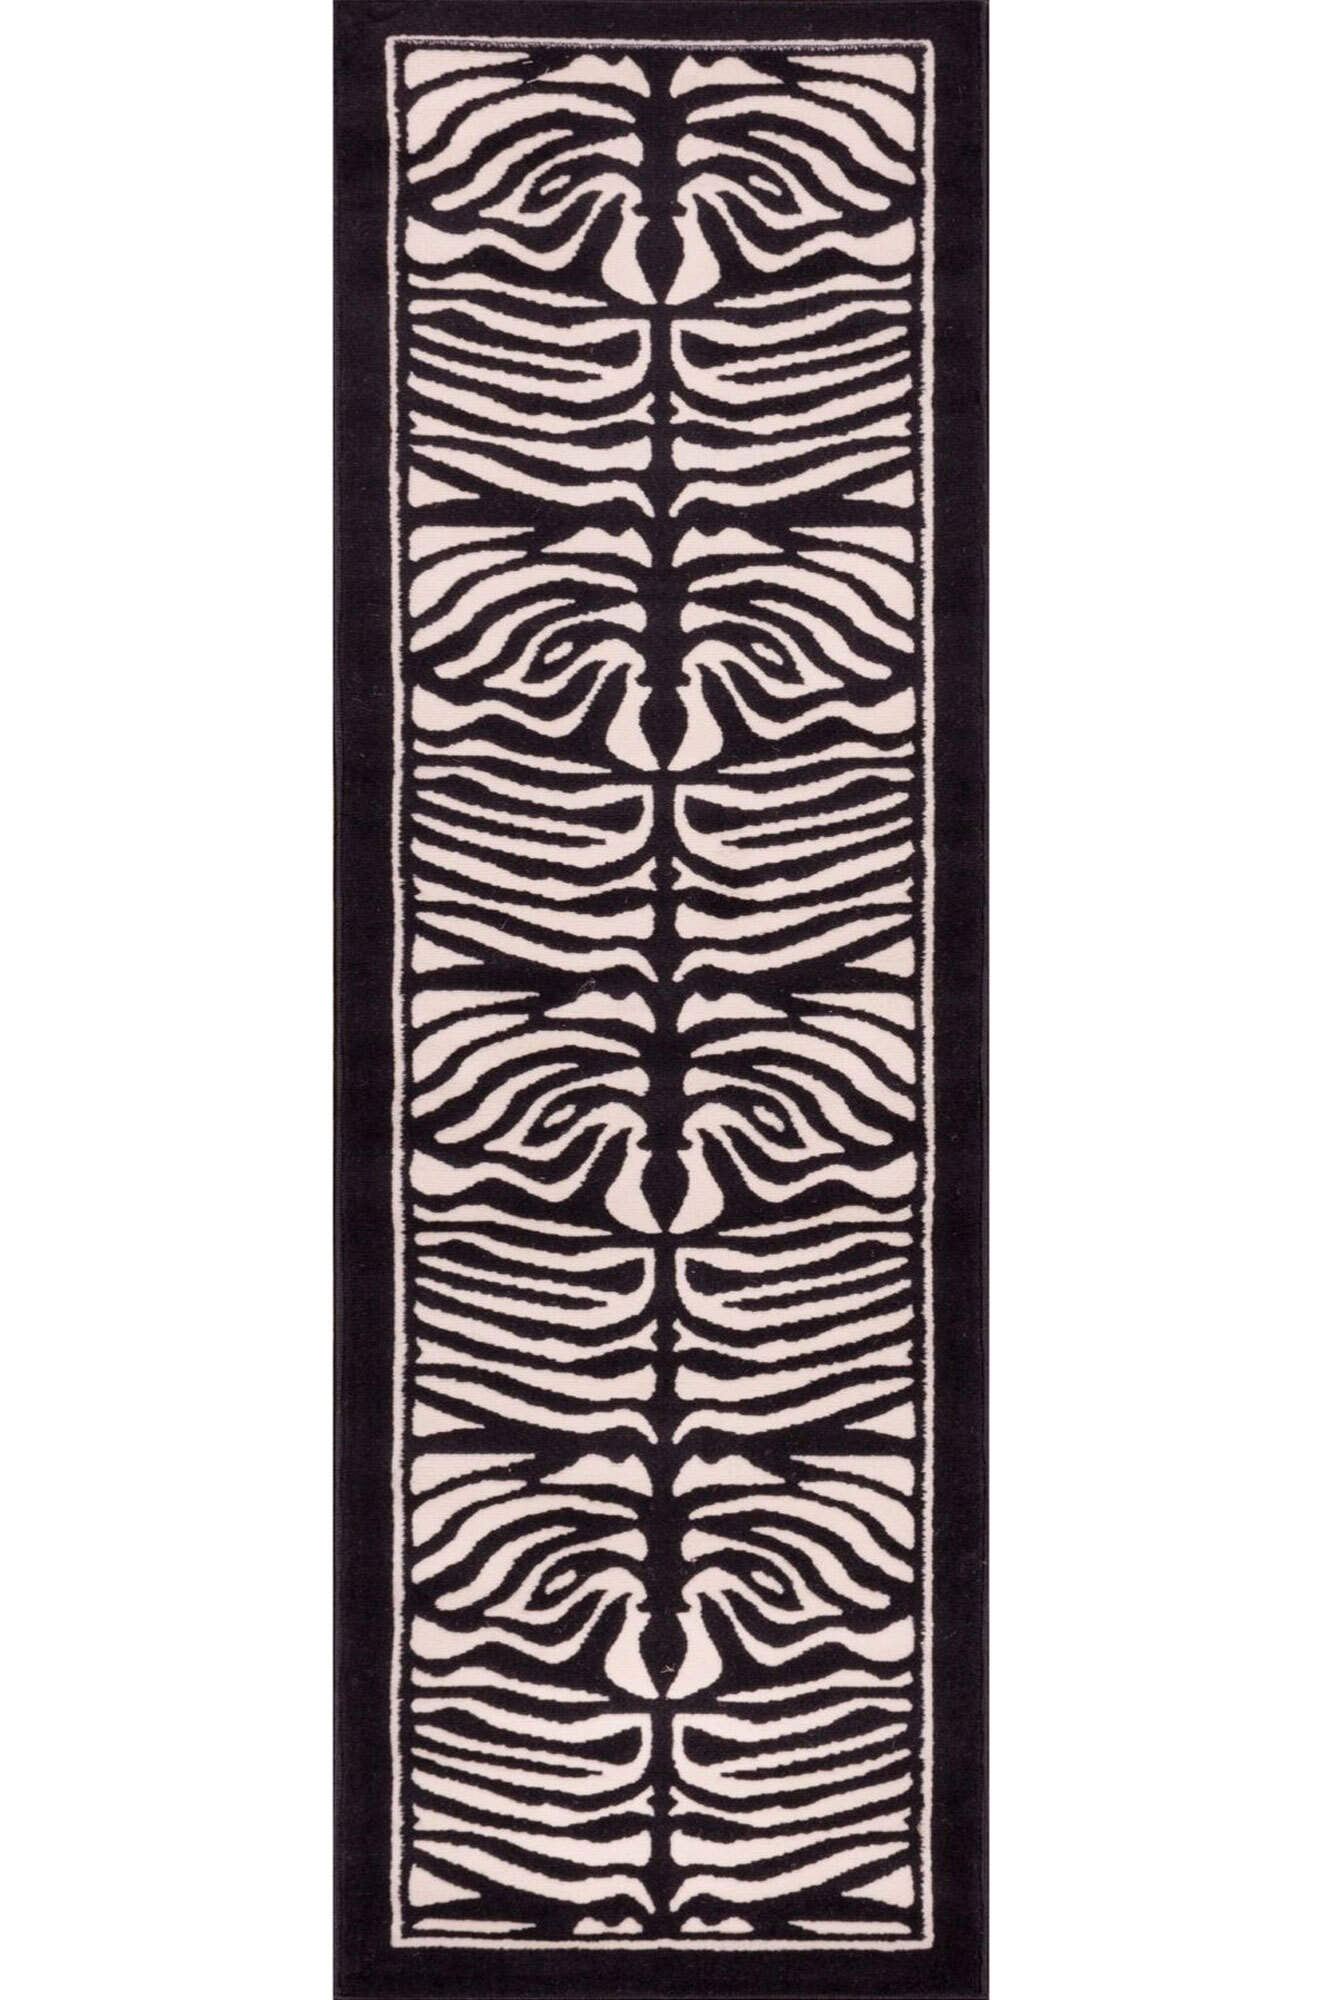 Americo Zebra Animal Print Rug